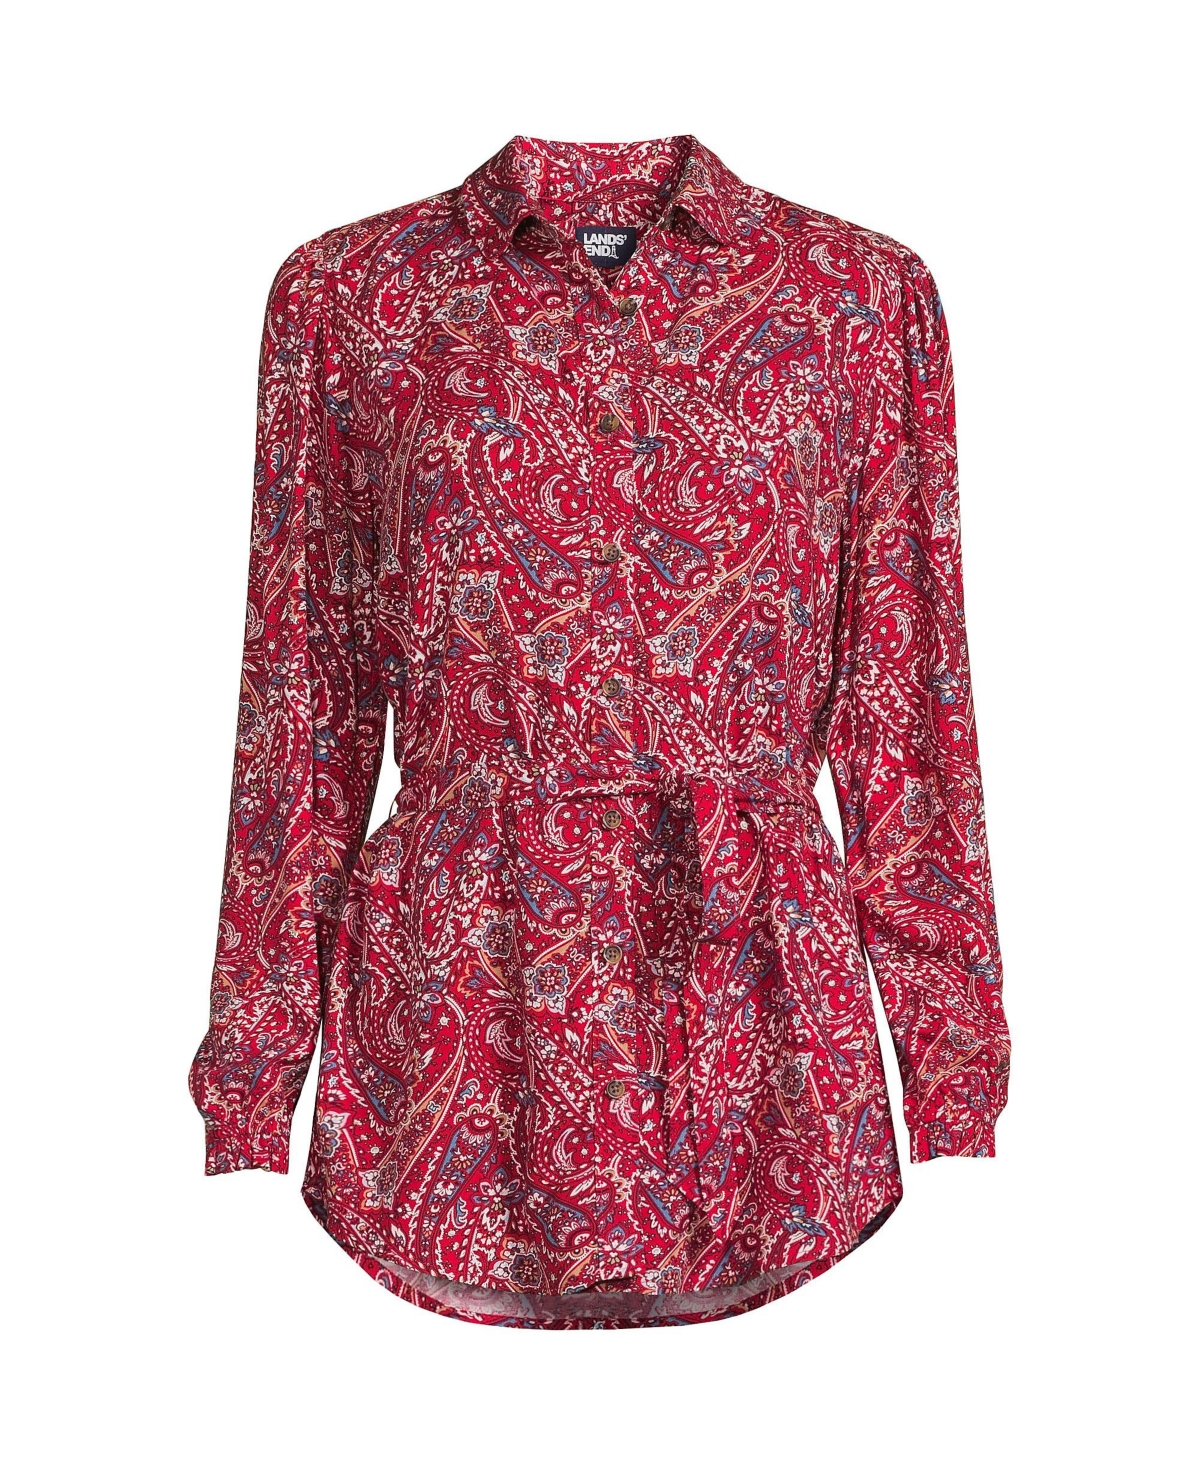 Women's Rayon Tie Waist Shirt - Rich red swirl paisley